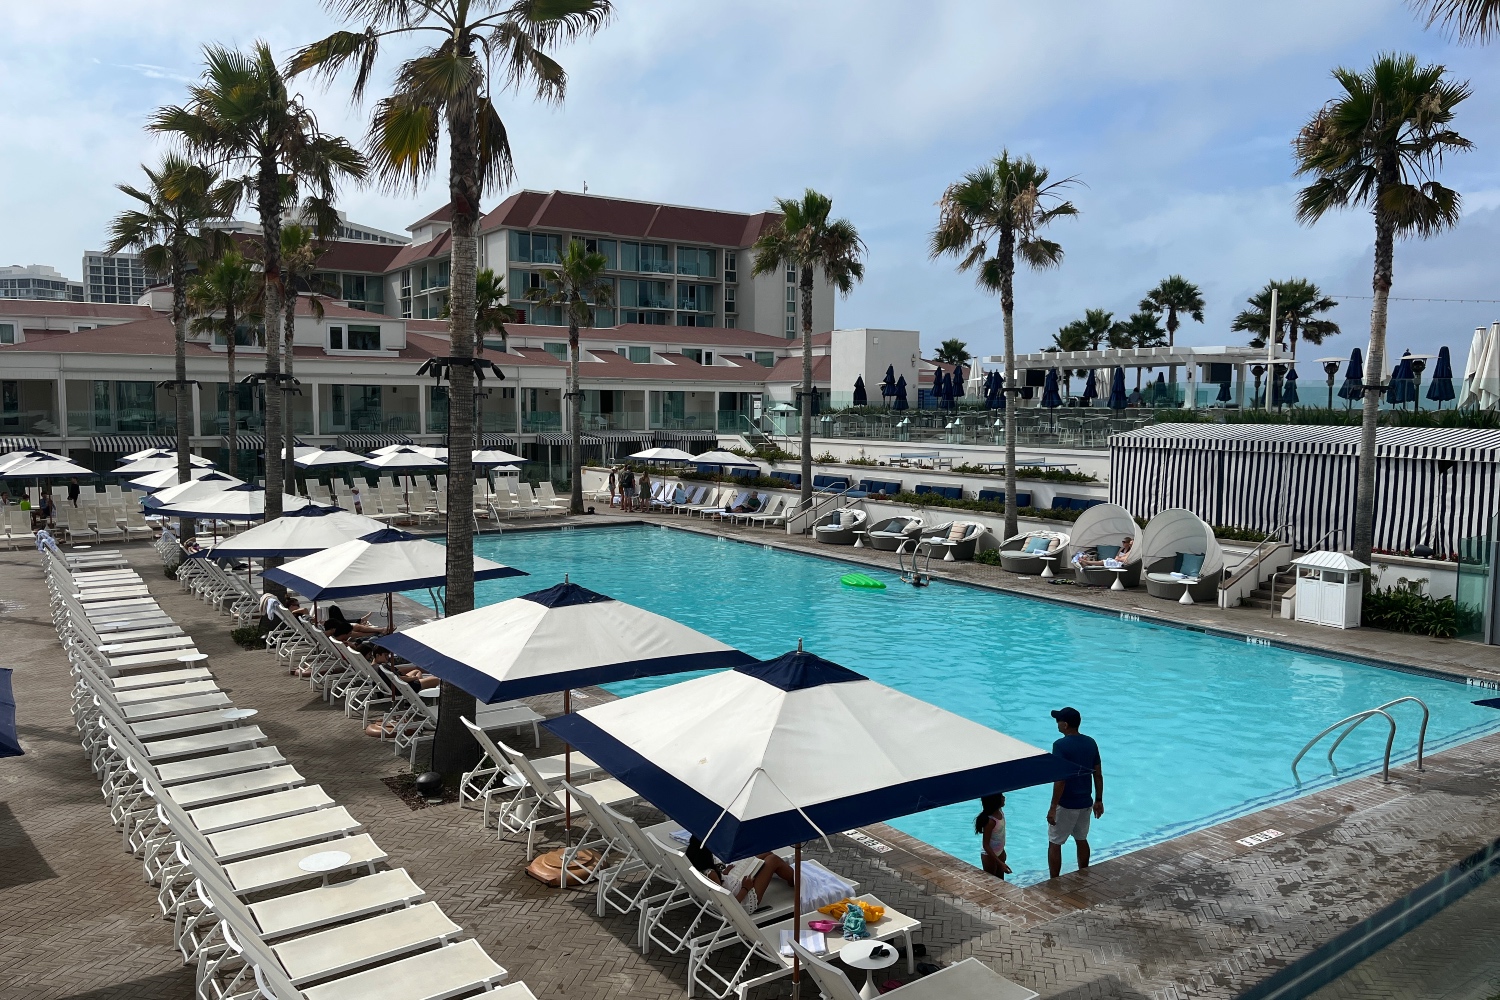 hotel del coronado pool day pass